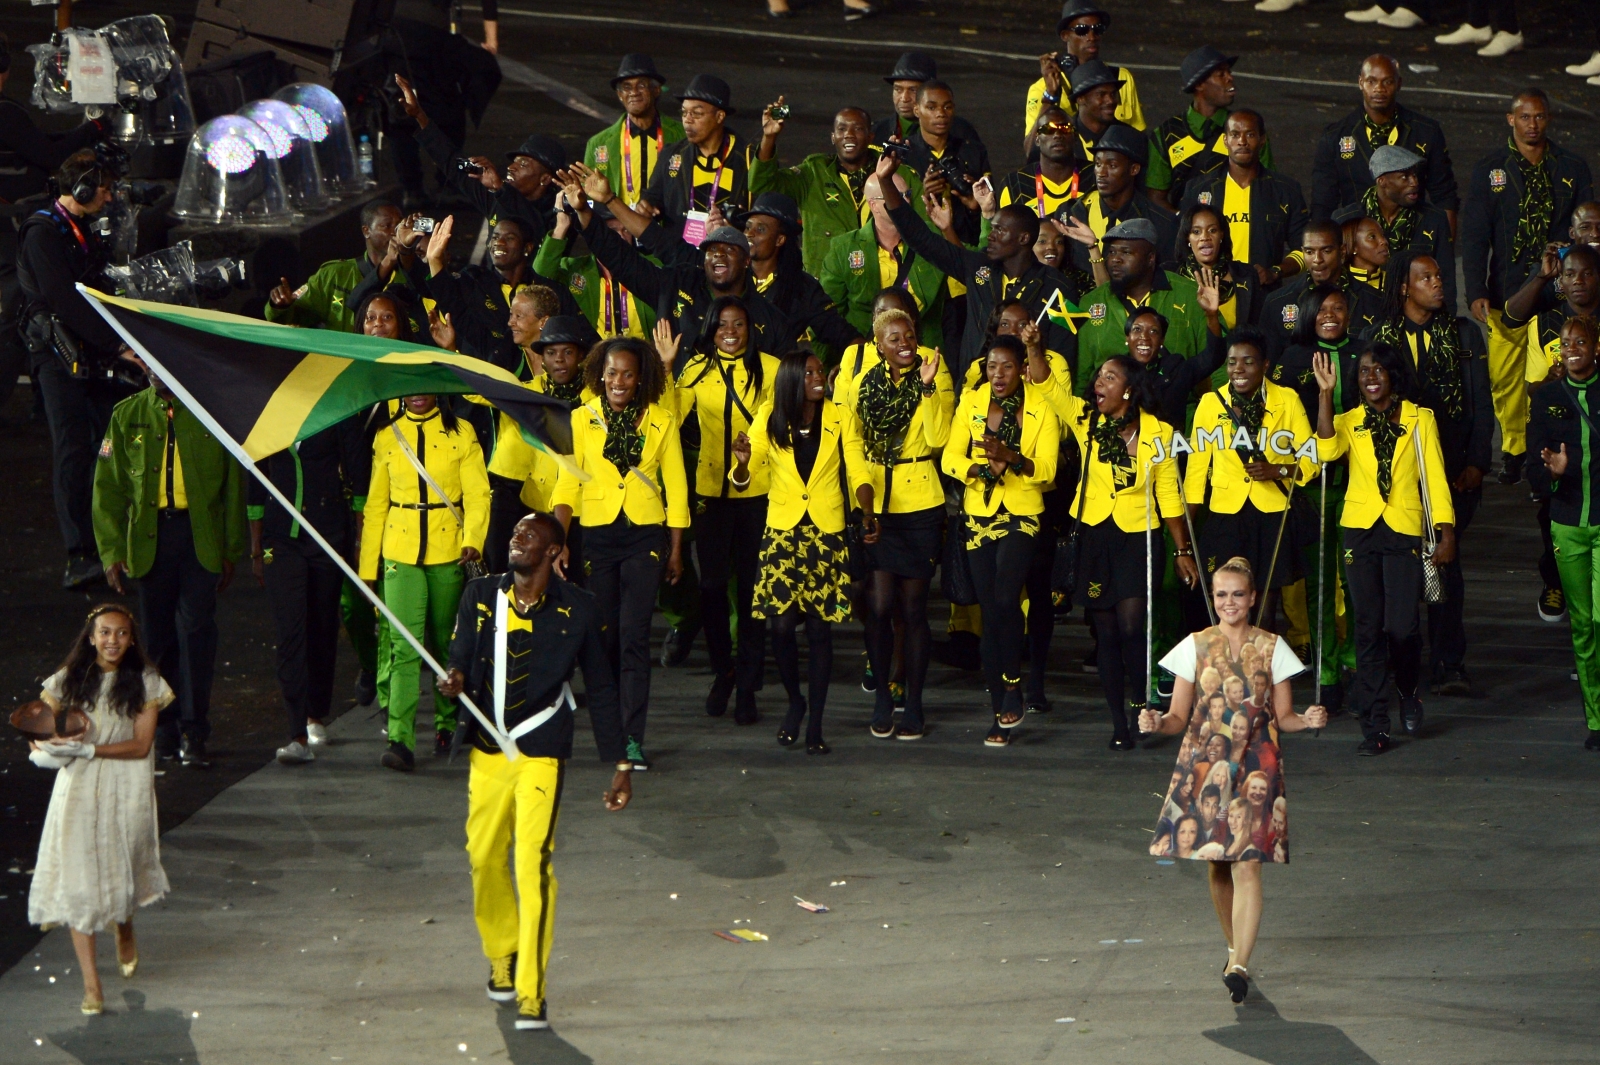 Rio olympics 2016 opening ceremony